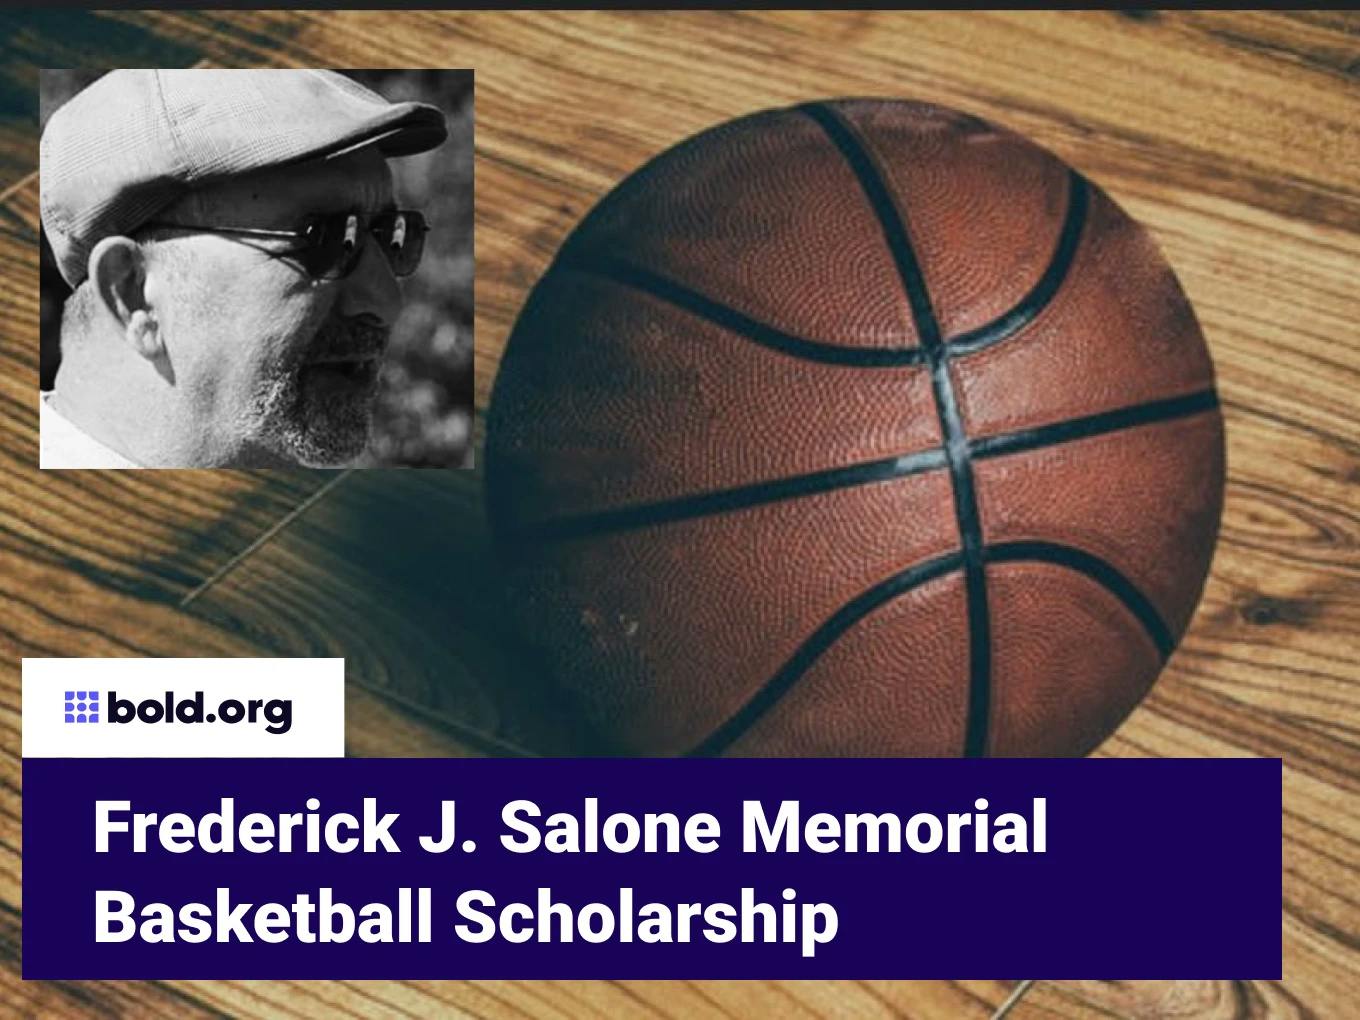 Frederick J. Salone Memorial Basketball Scholarship